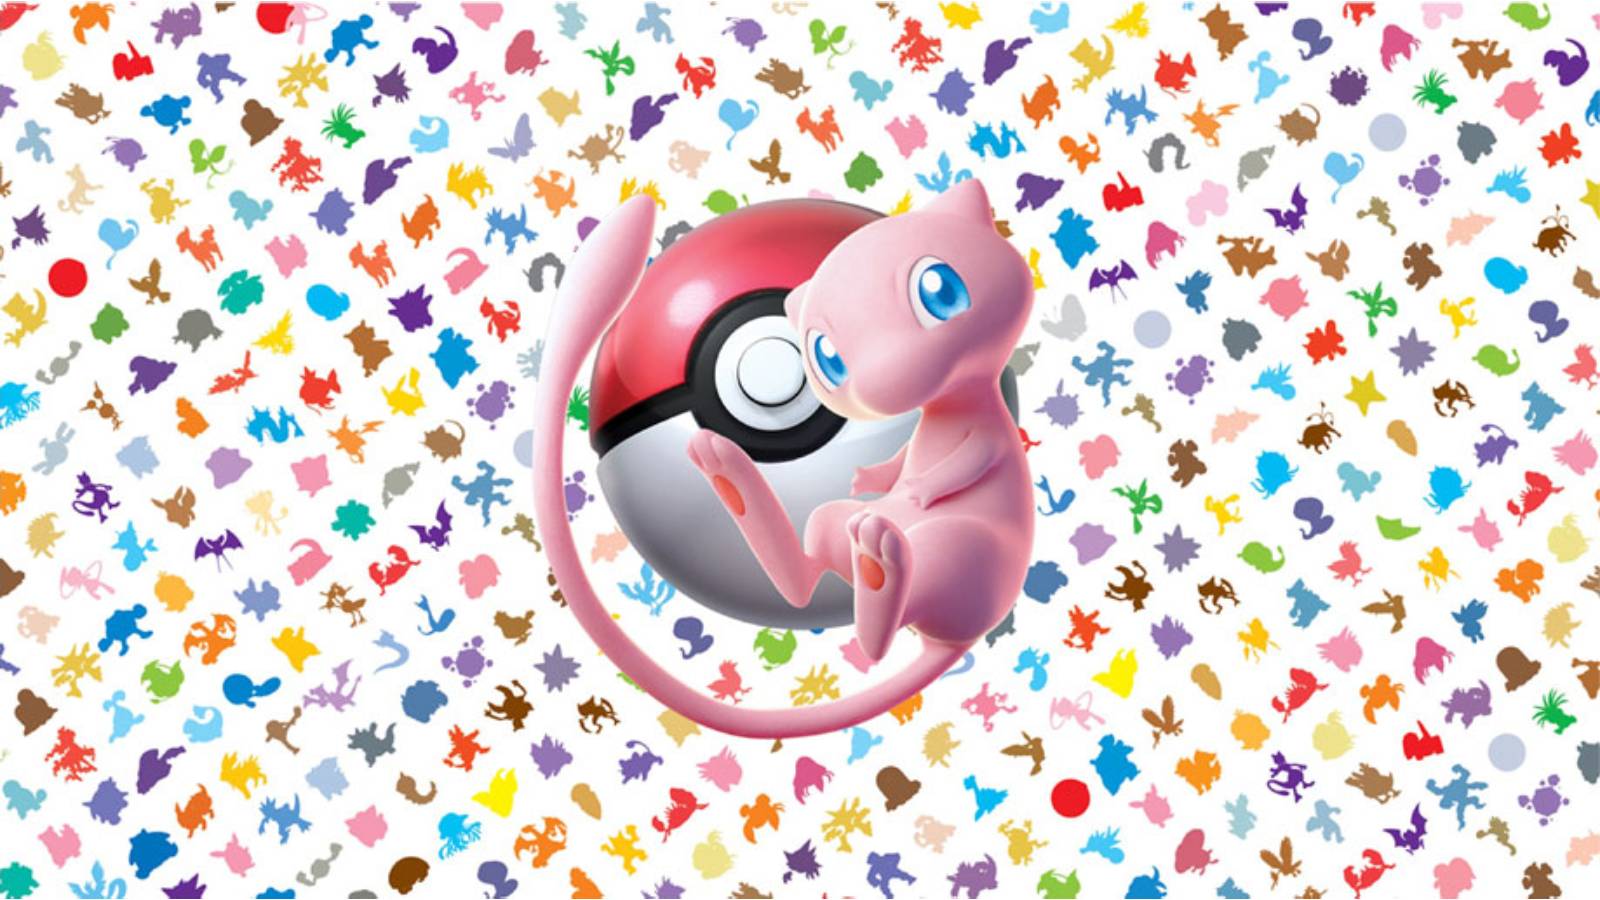 Promotional art shows the Pokemon Mew